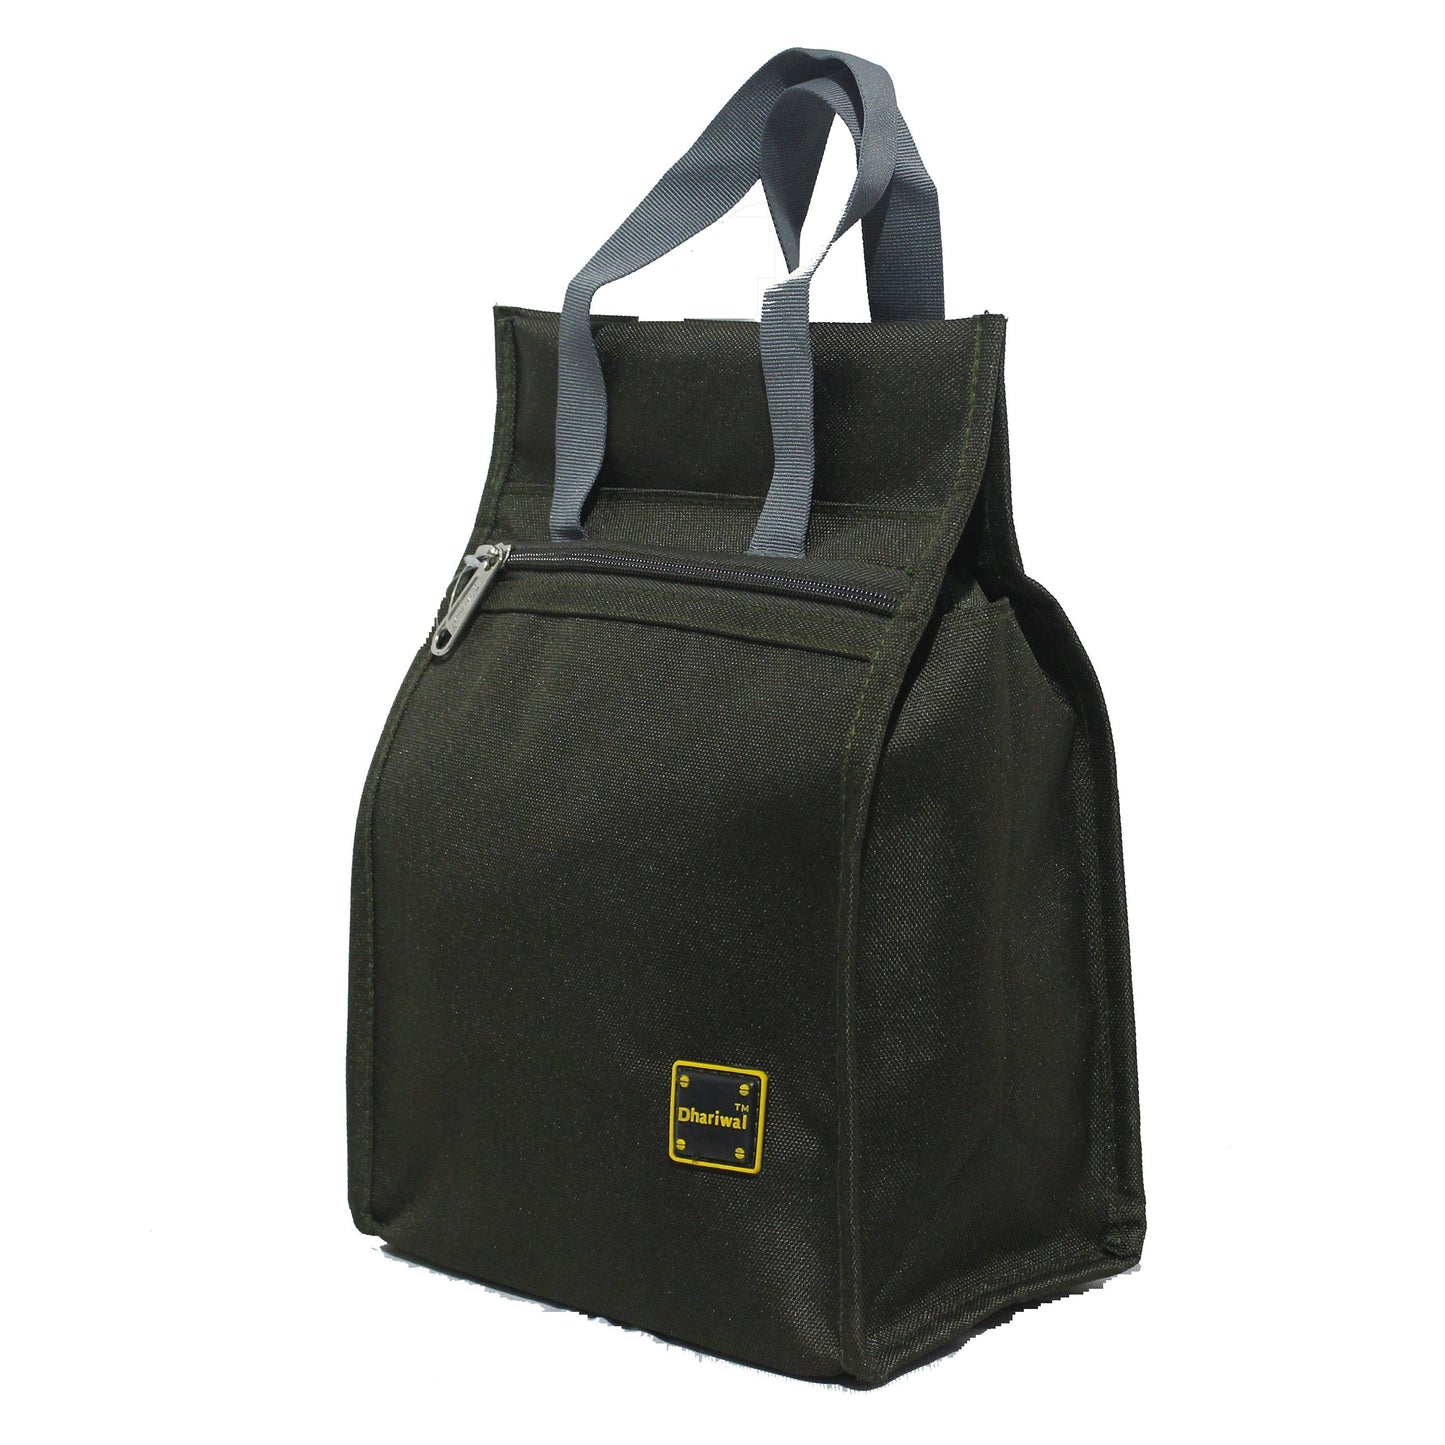 Thaili No.4 Tiffin Bag 14in x 10in x 6in TB-403 - Medium Tiffin Bags Dhariwal 